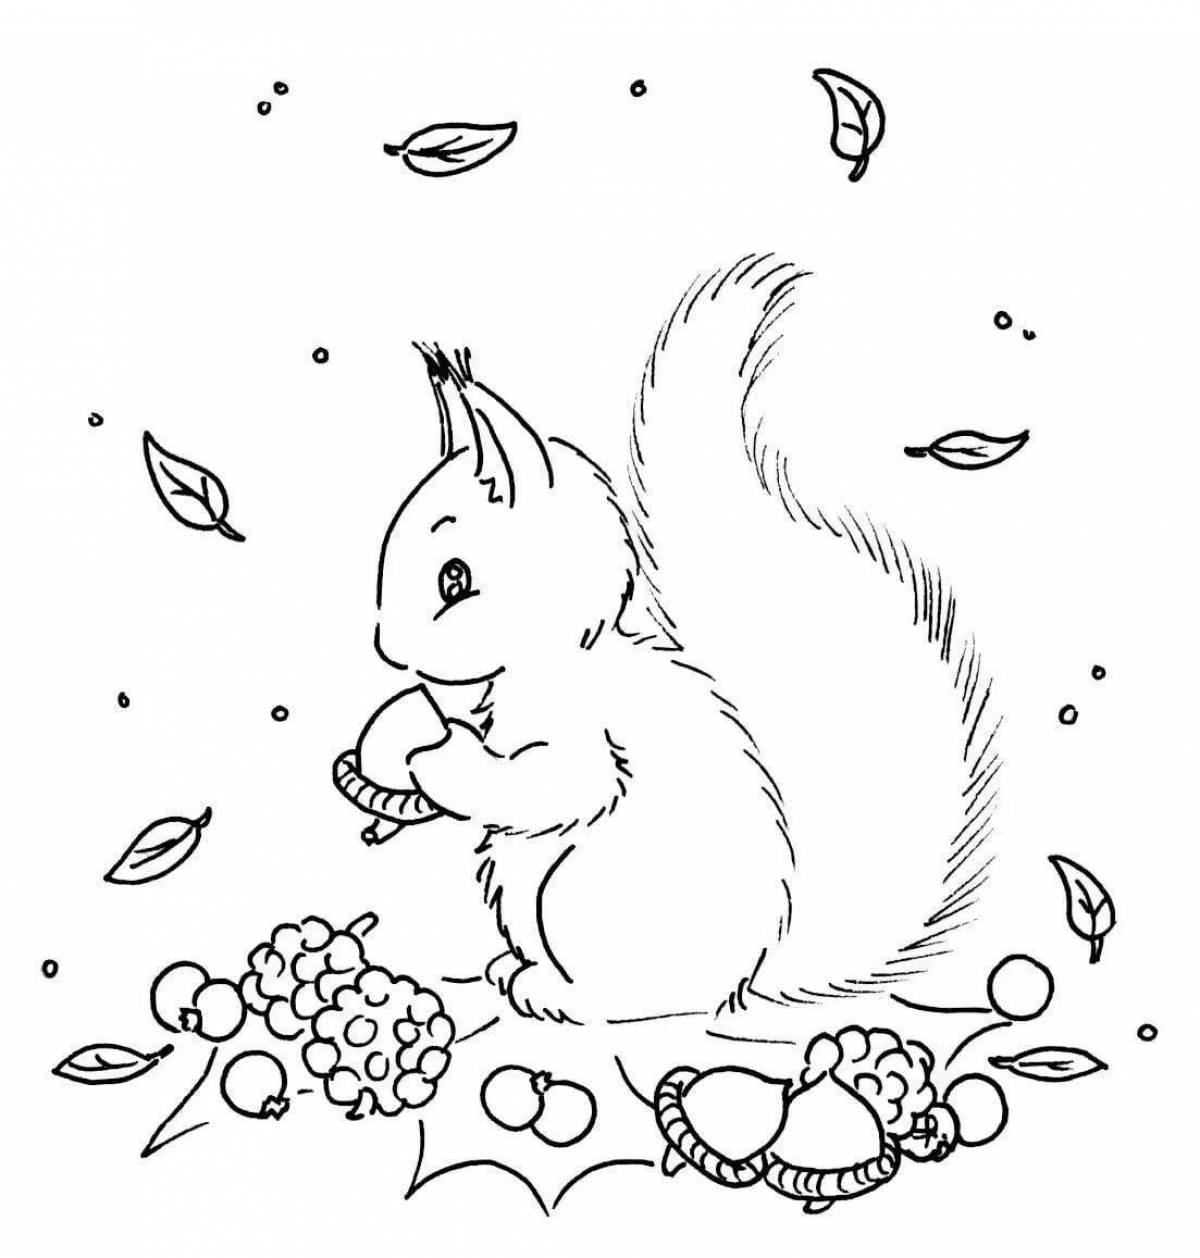 Fun coloring squirrel with nuts